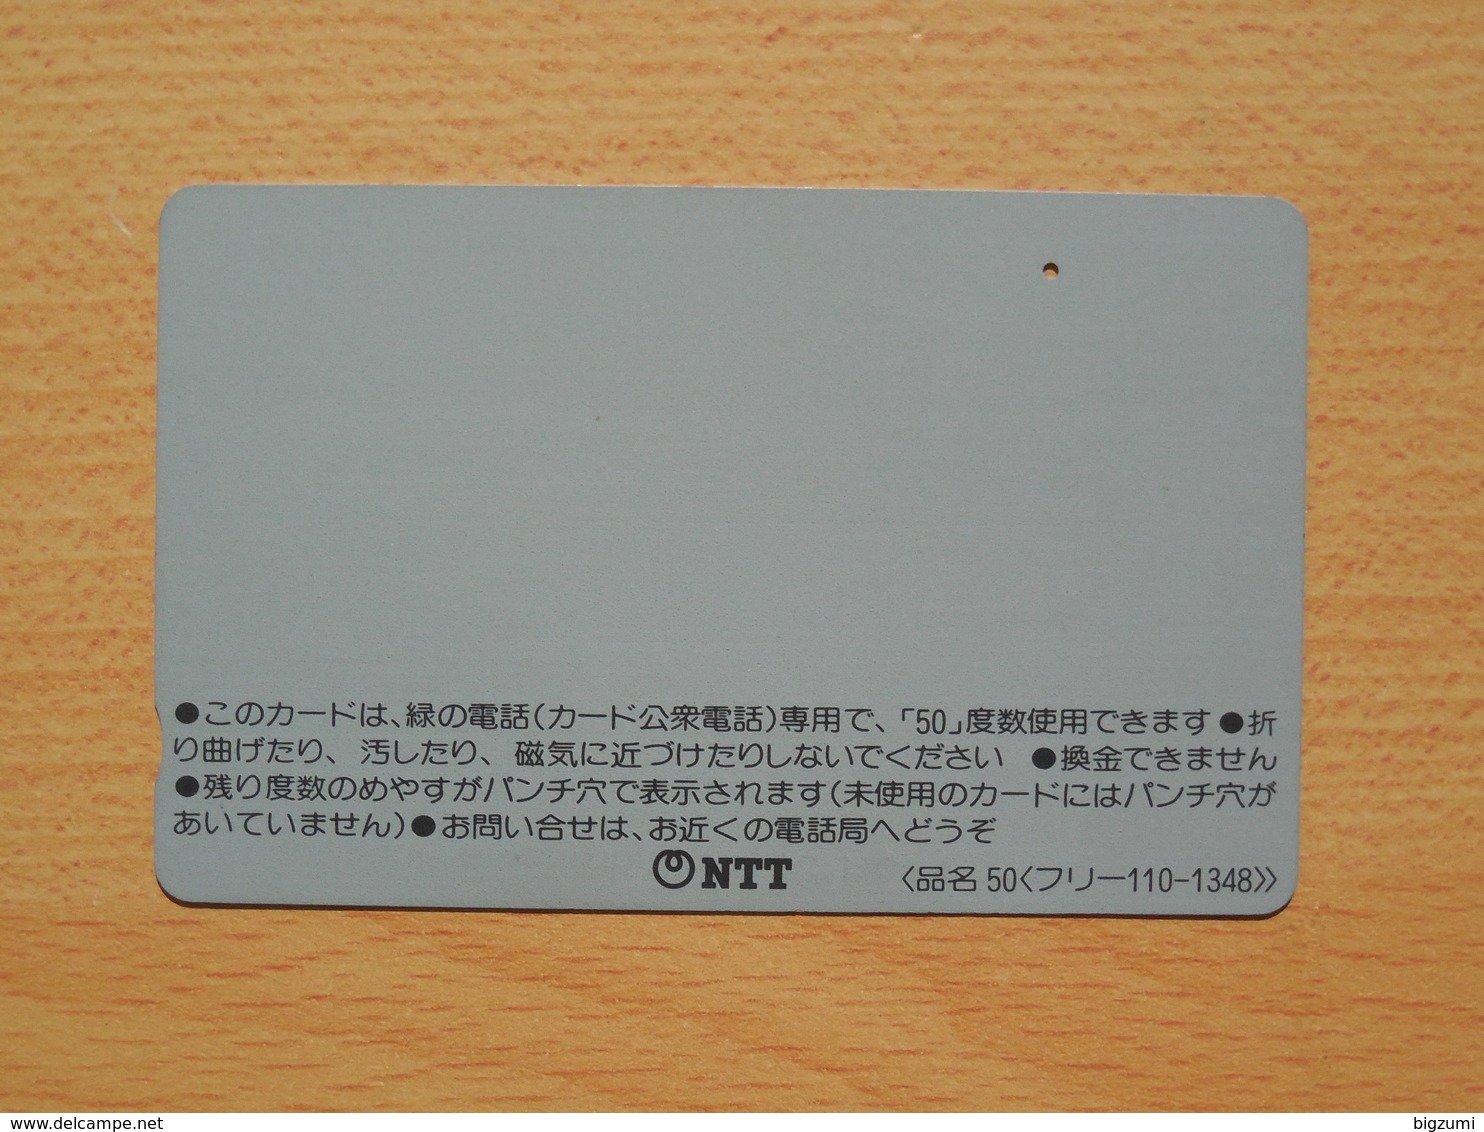 Japon Japan Free Front Bar, Balken Phonecard - 110-1348 / Comet Halley / One Punch - Astronomia